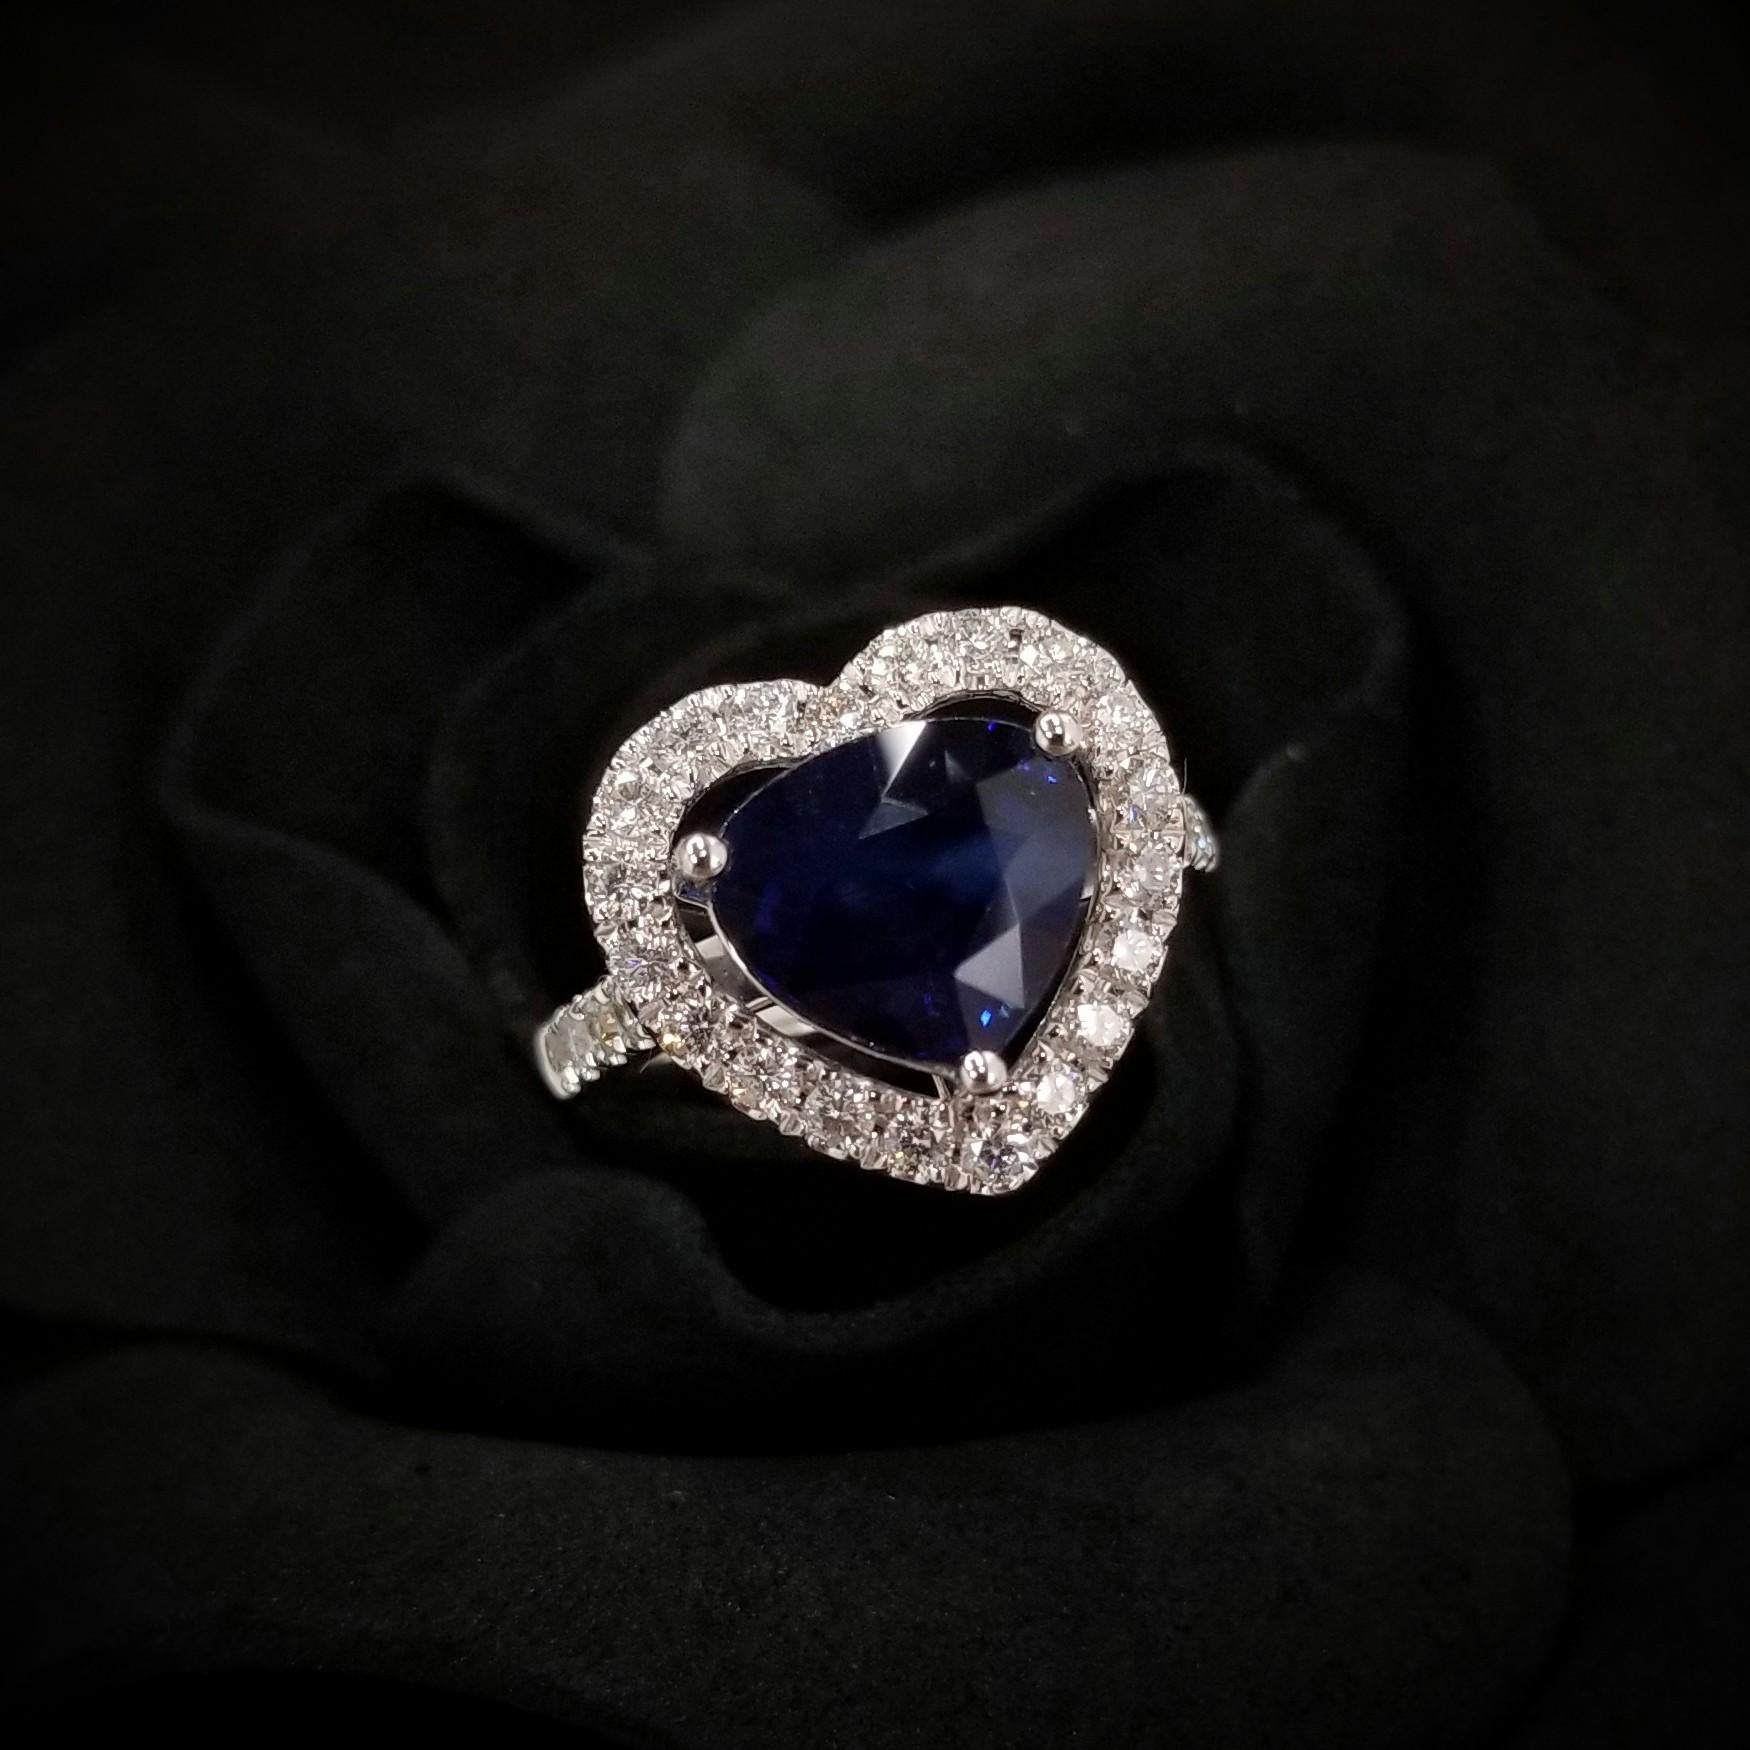 IGI Certified 3.15Carat Blue Sapphire & Diamond Ring in 18K White Gold For Sale 1